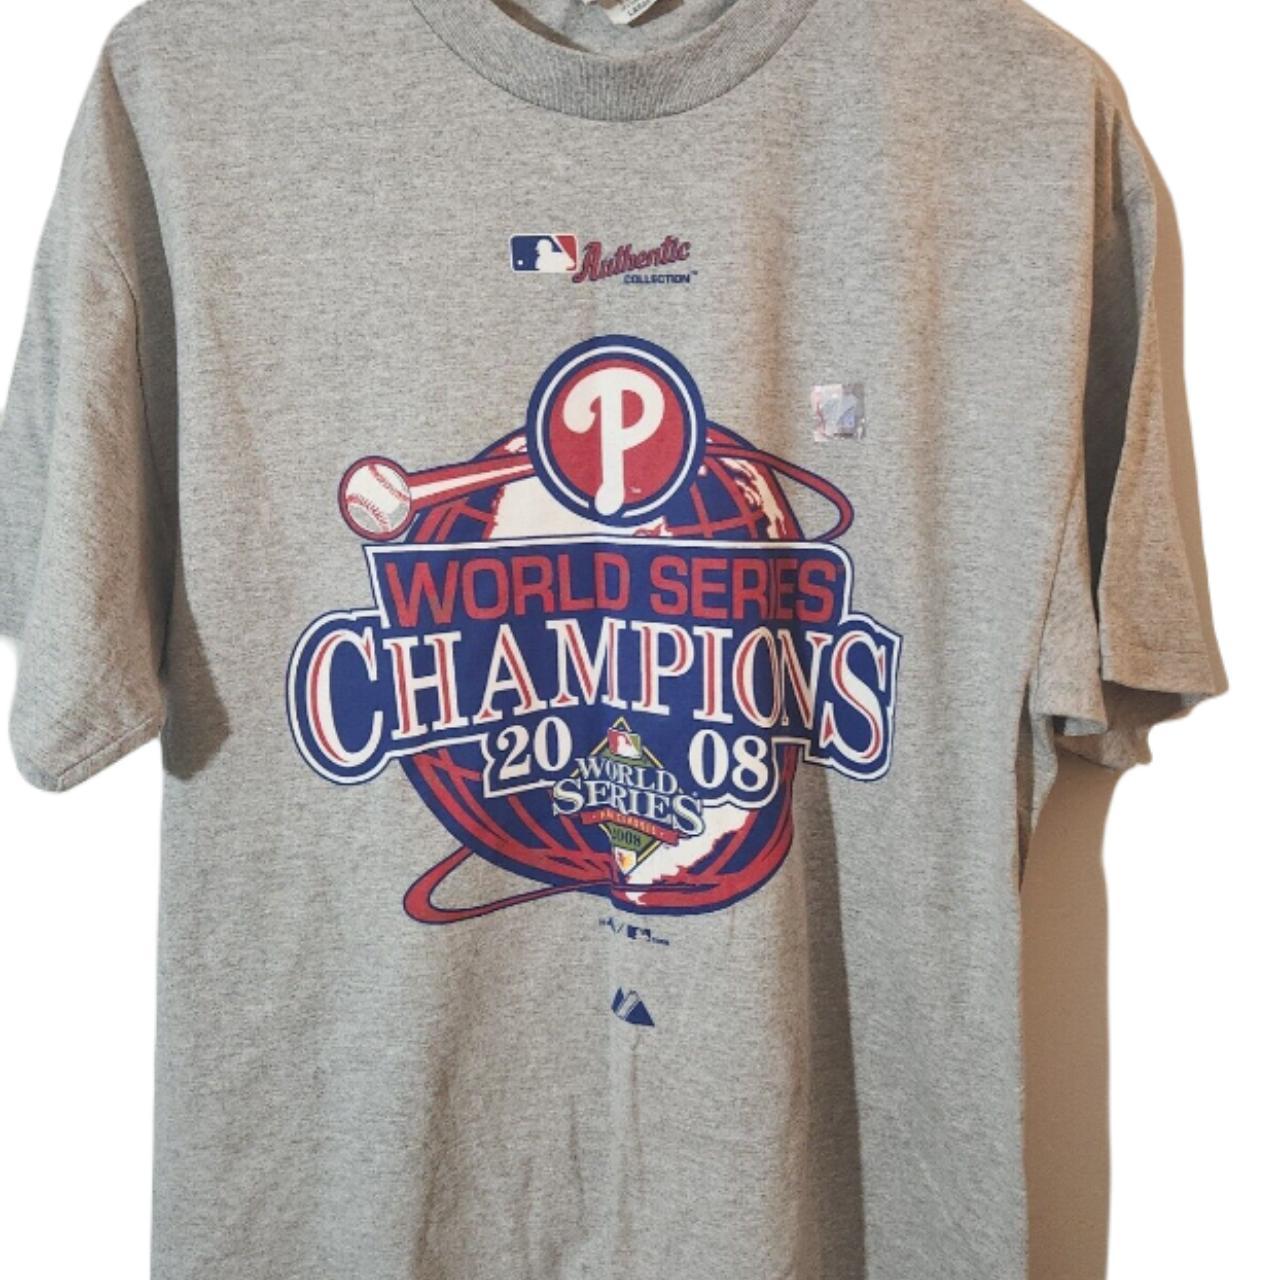 2008 Philadelphia Phillies World Series Champions - Depop